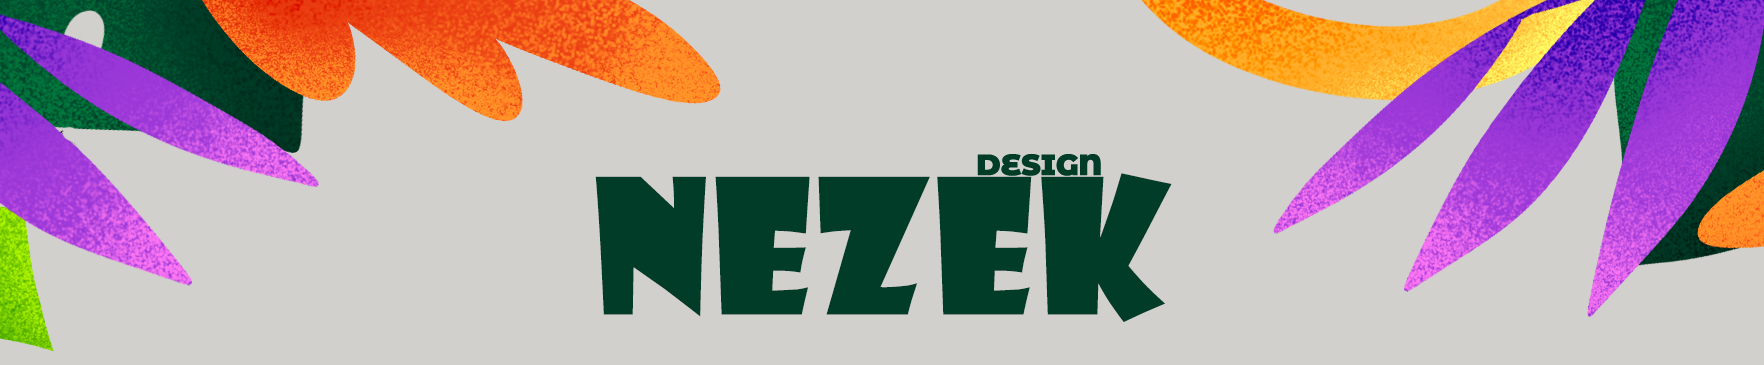 Nezek Design's profile banner